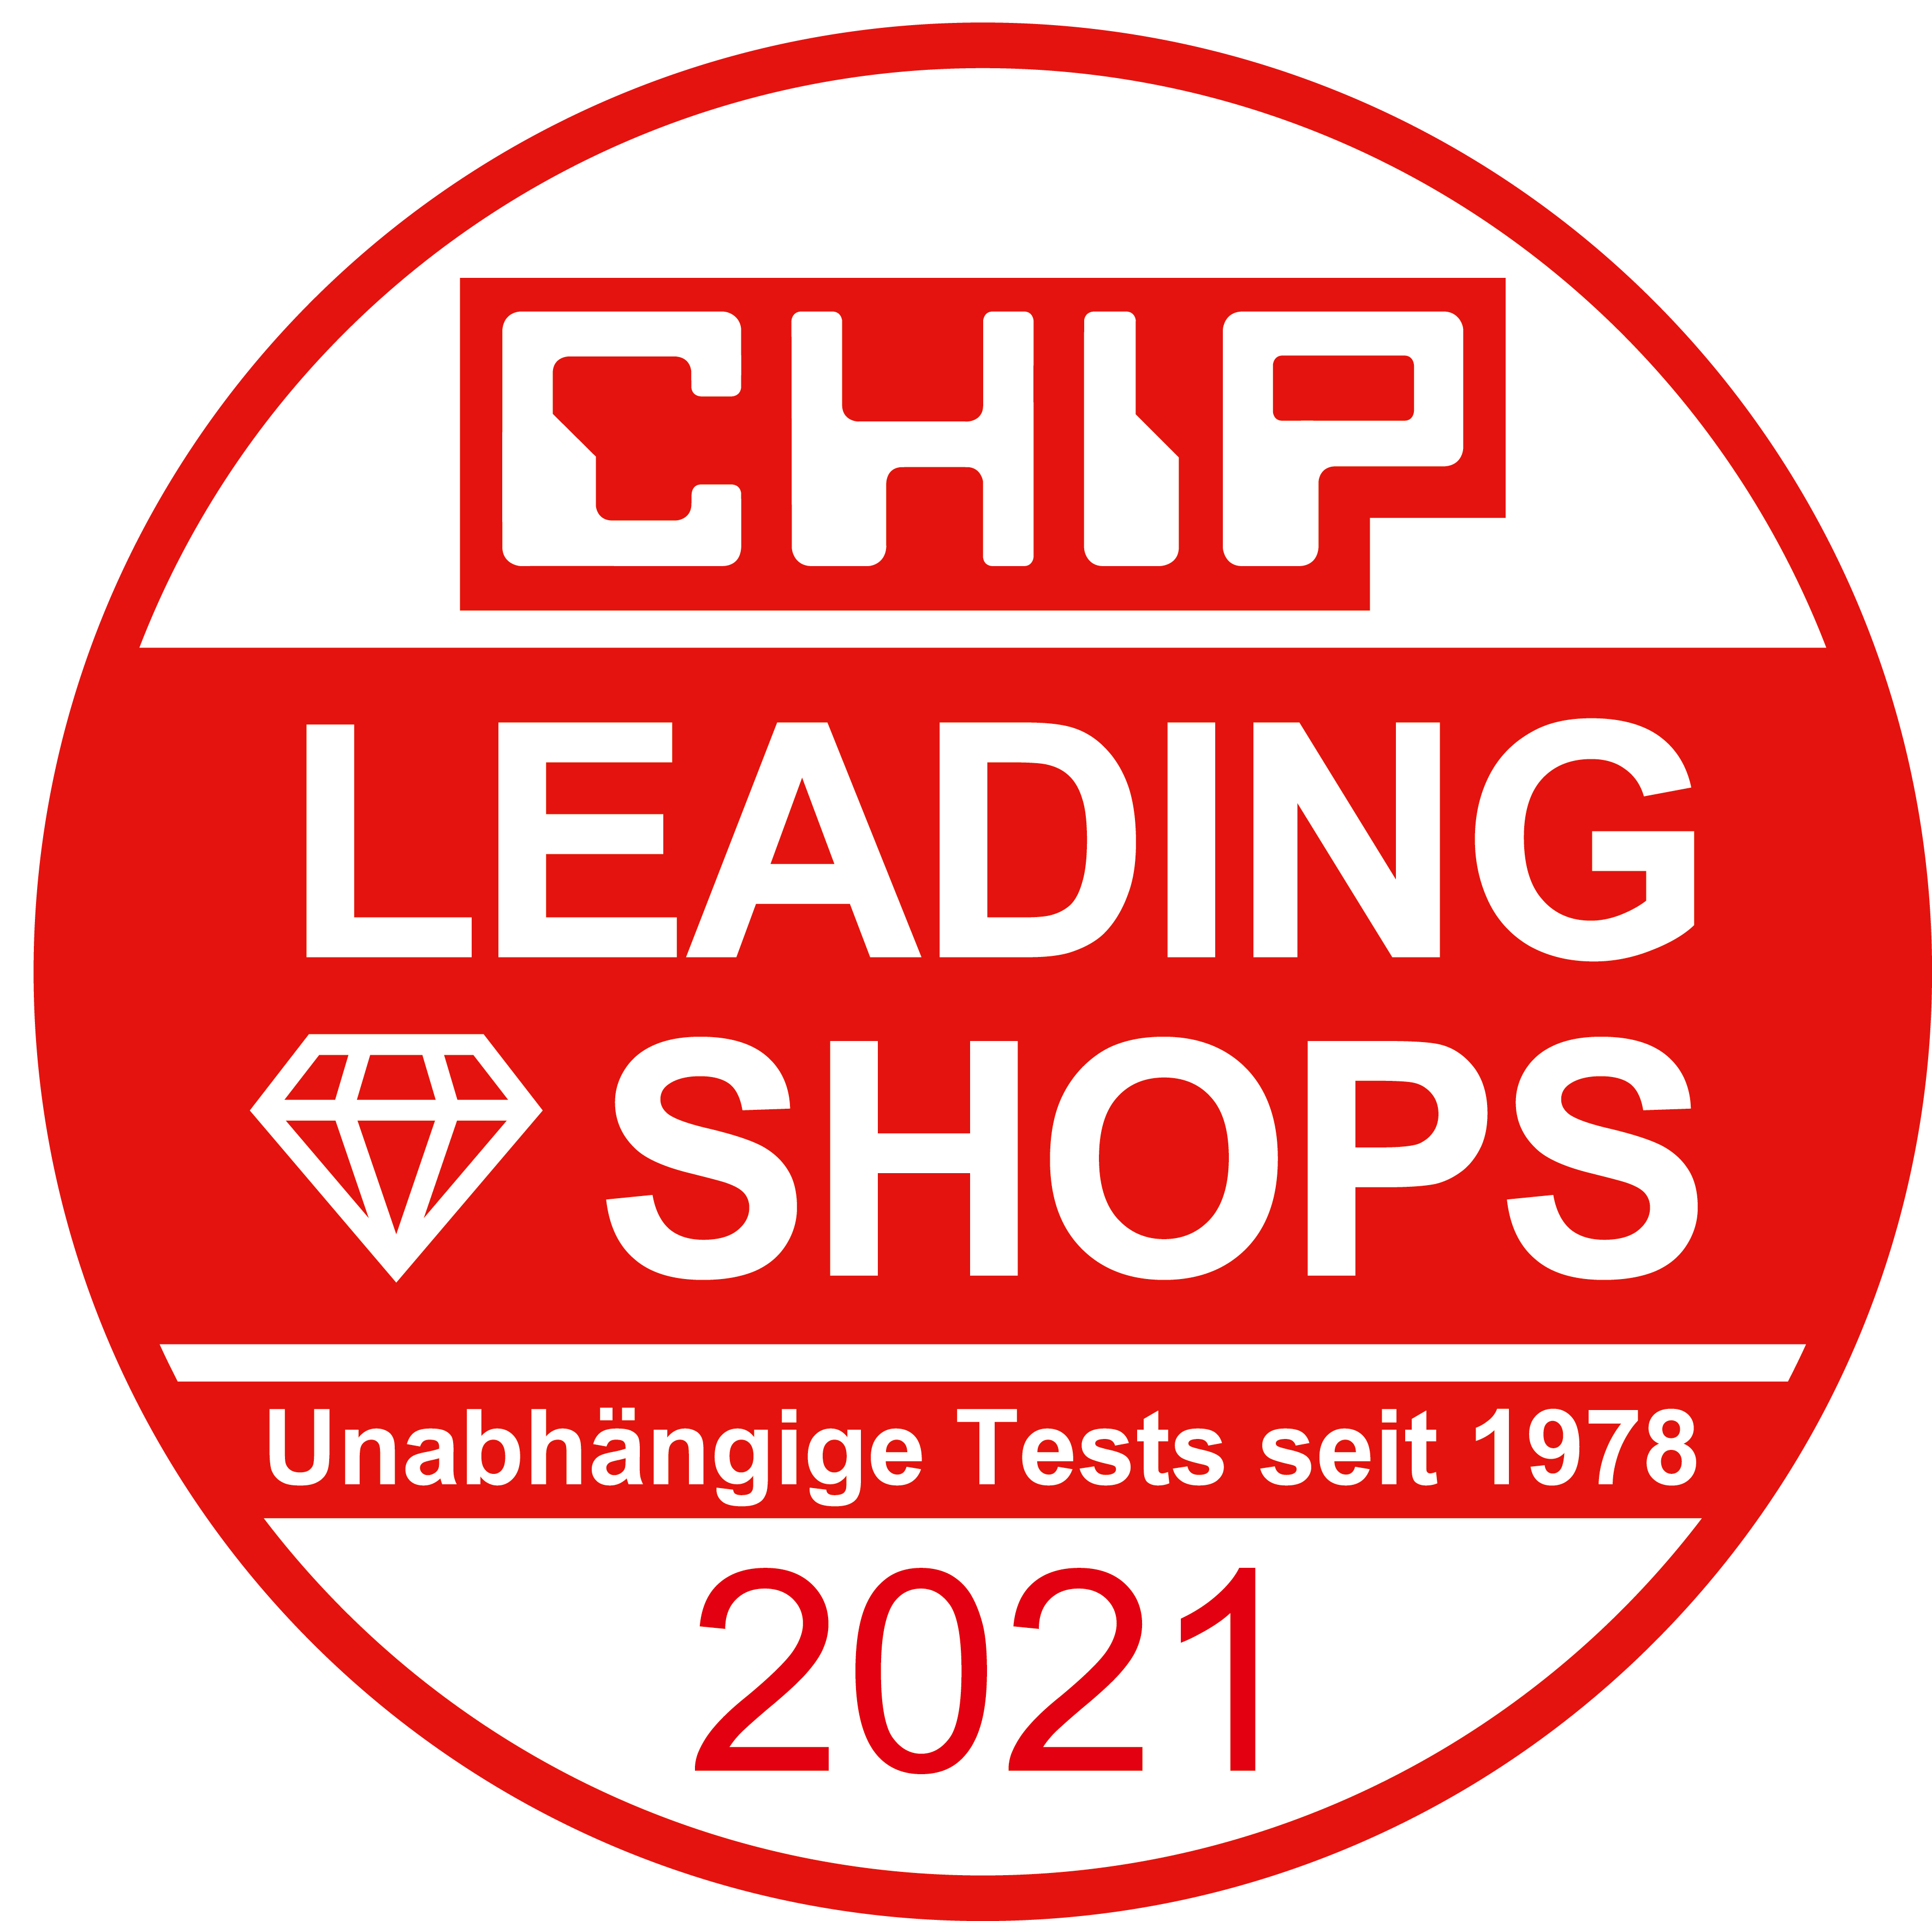 Leading Shops 2021